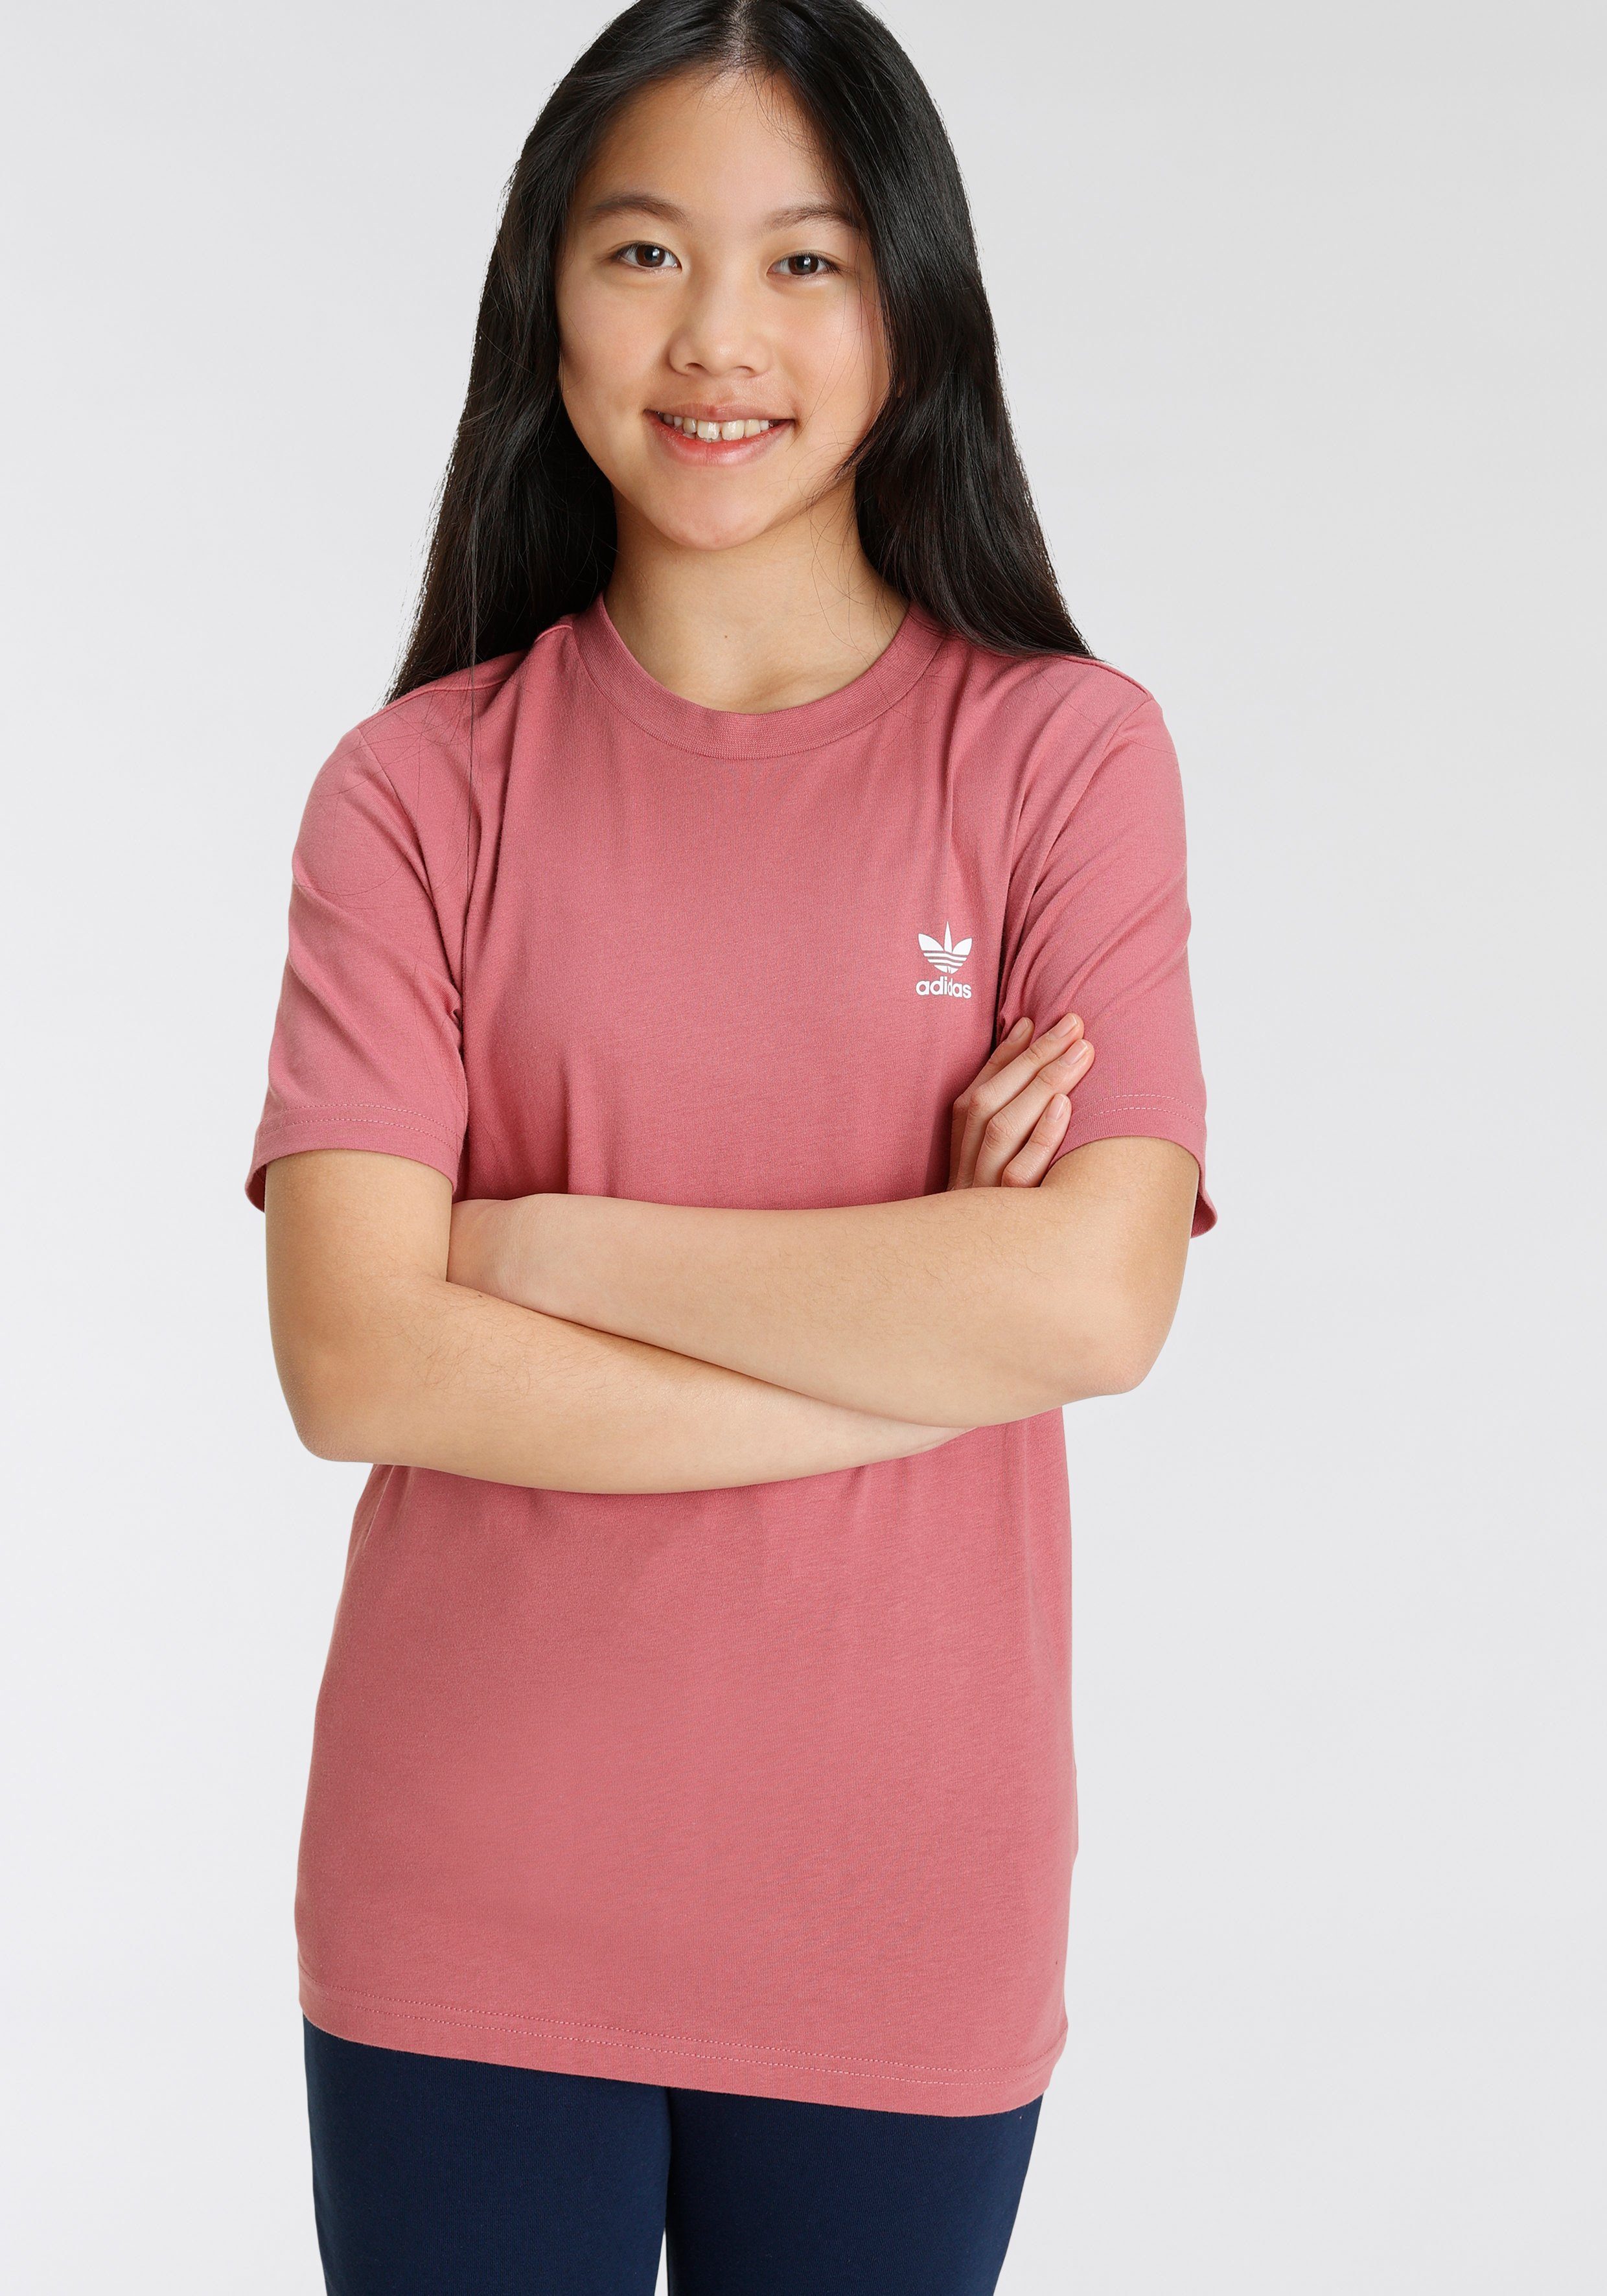 T-Shirt Pink TEE Strata Originals adidas